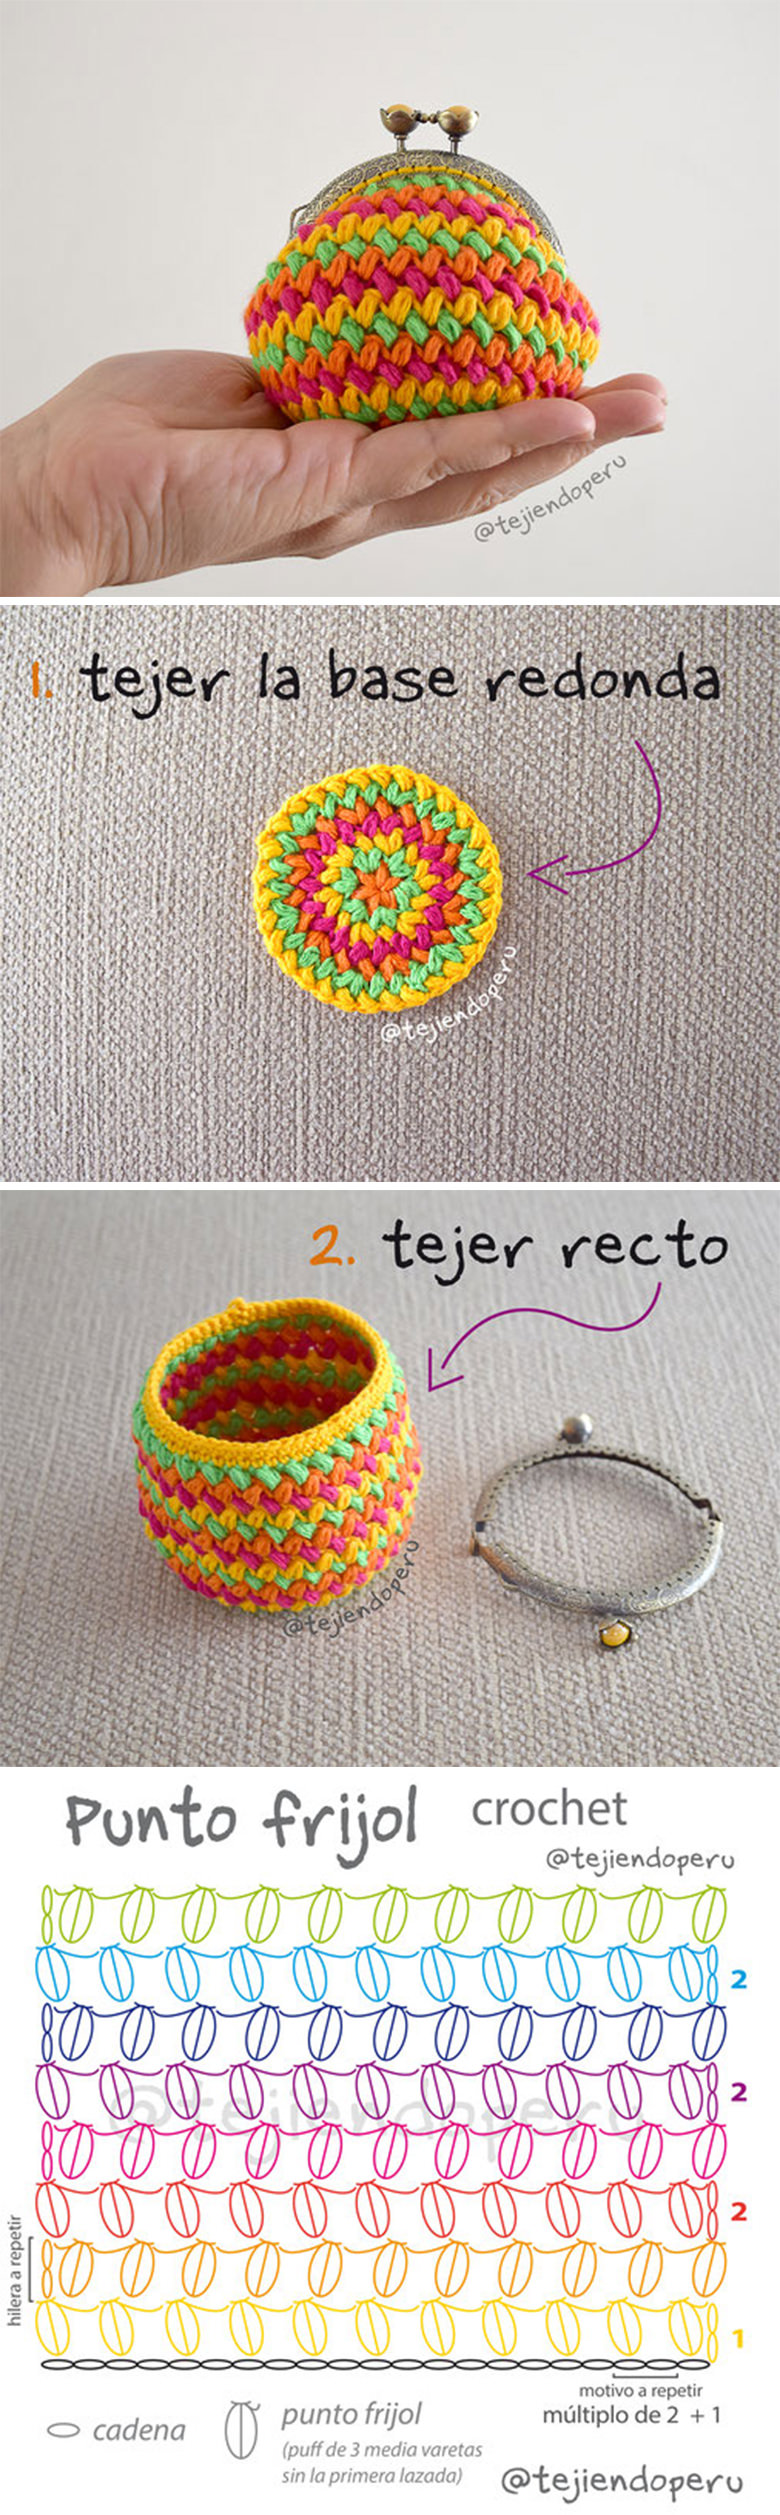 Bean Stitch Purse Crochet Pattern